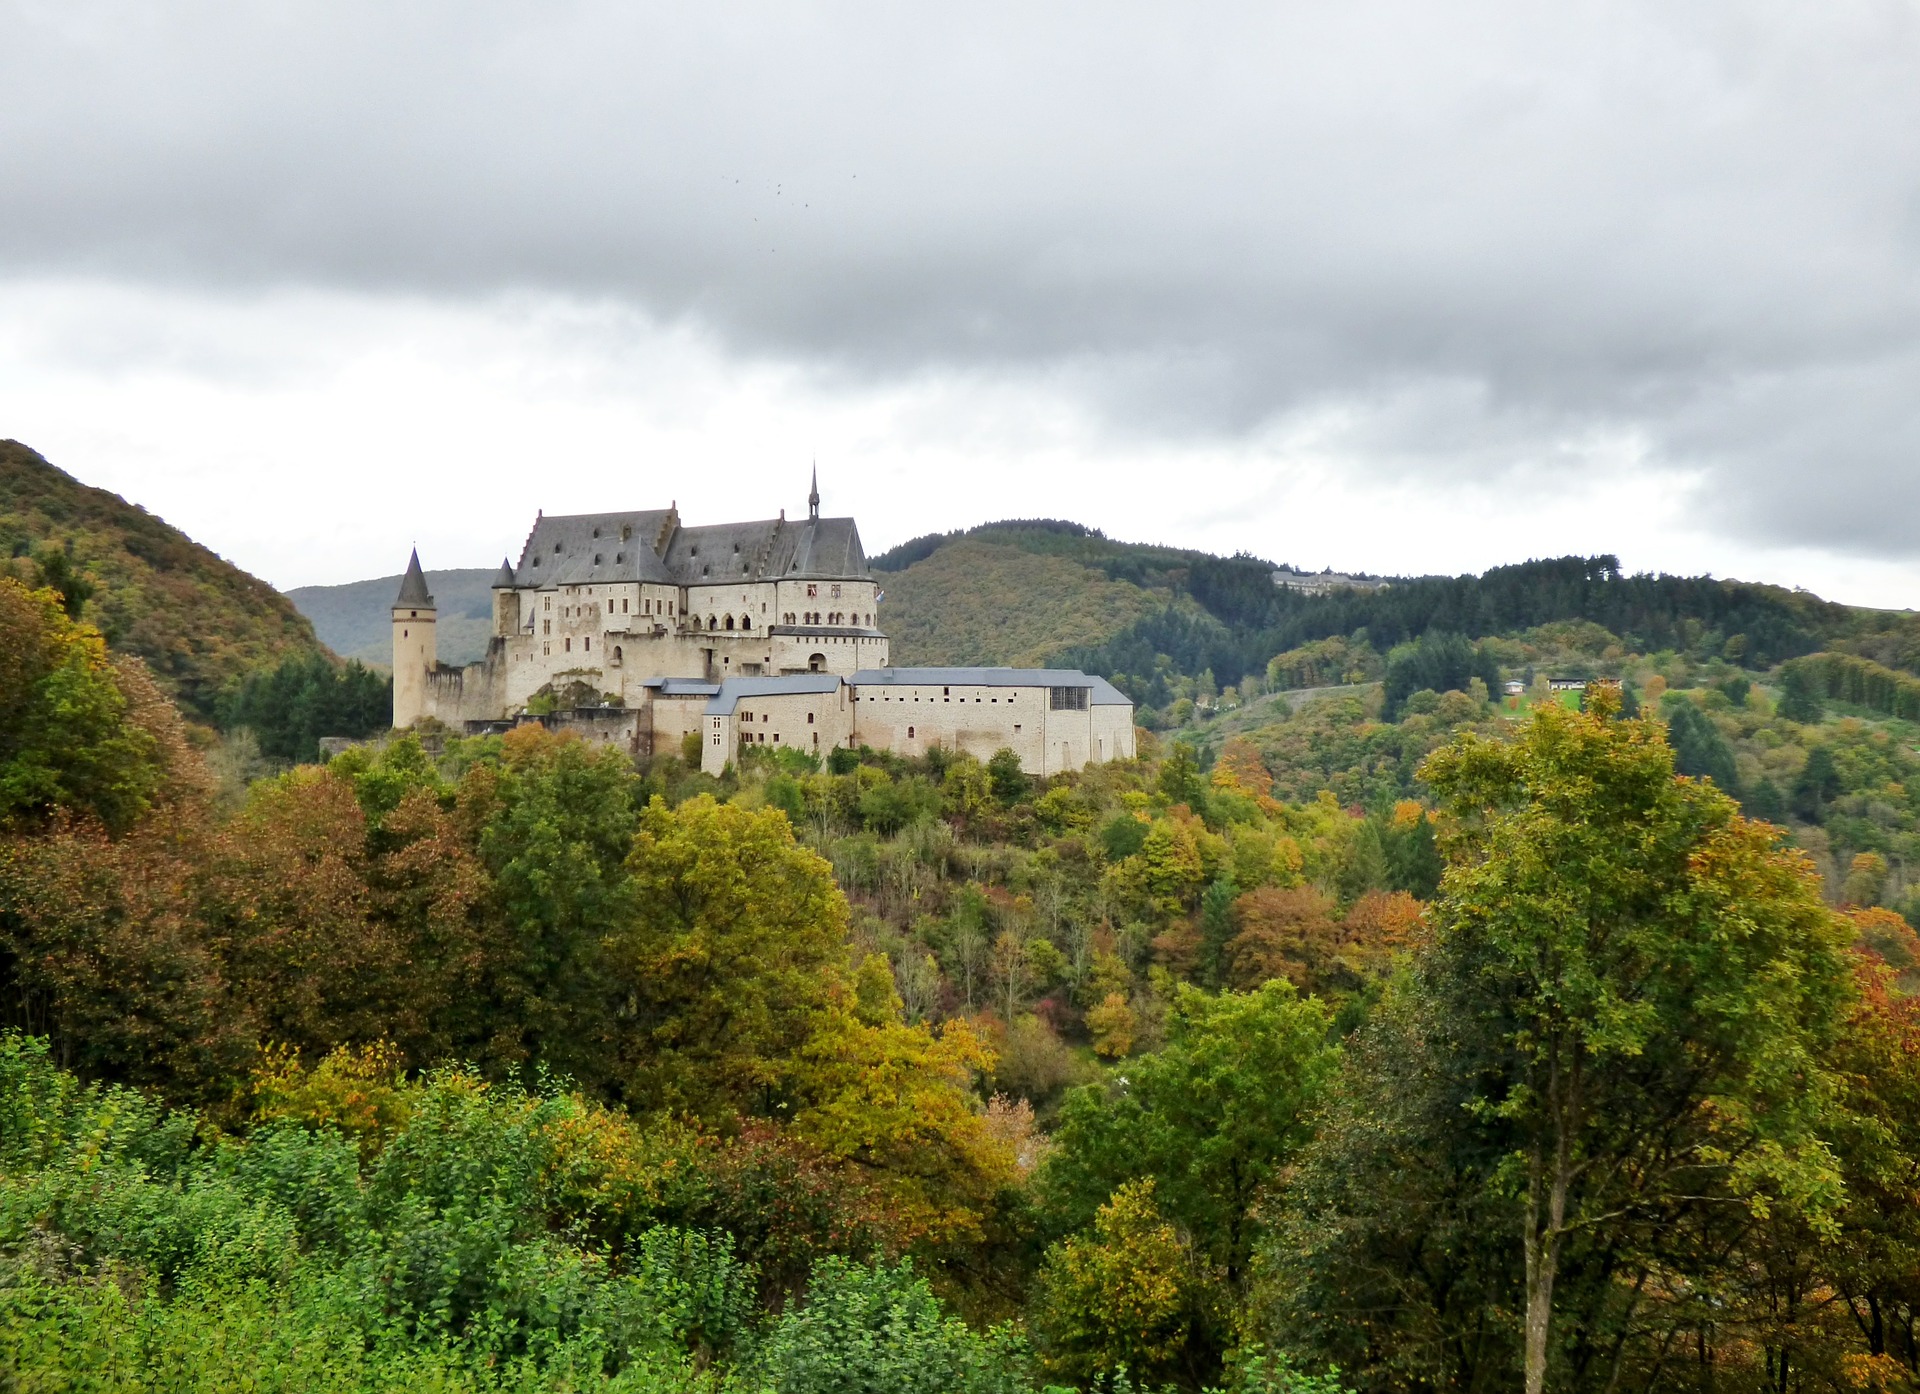 Image of the Vianden Castle